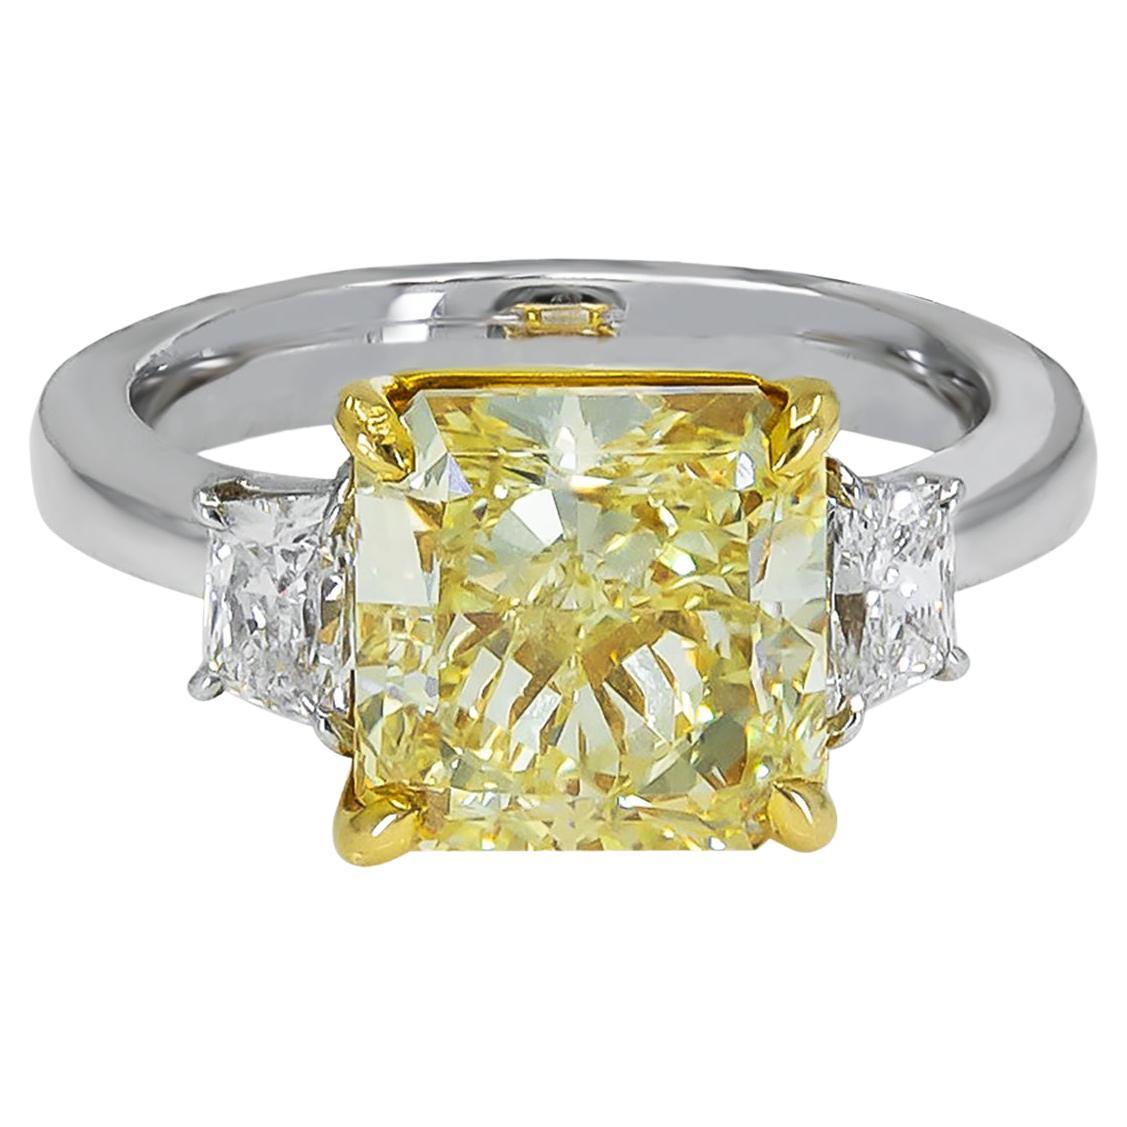 Spectra Fine Jewelry GIA zertifizierter 5,05 Karat intensiv gelber Fancy-Diamantring